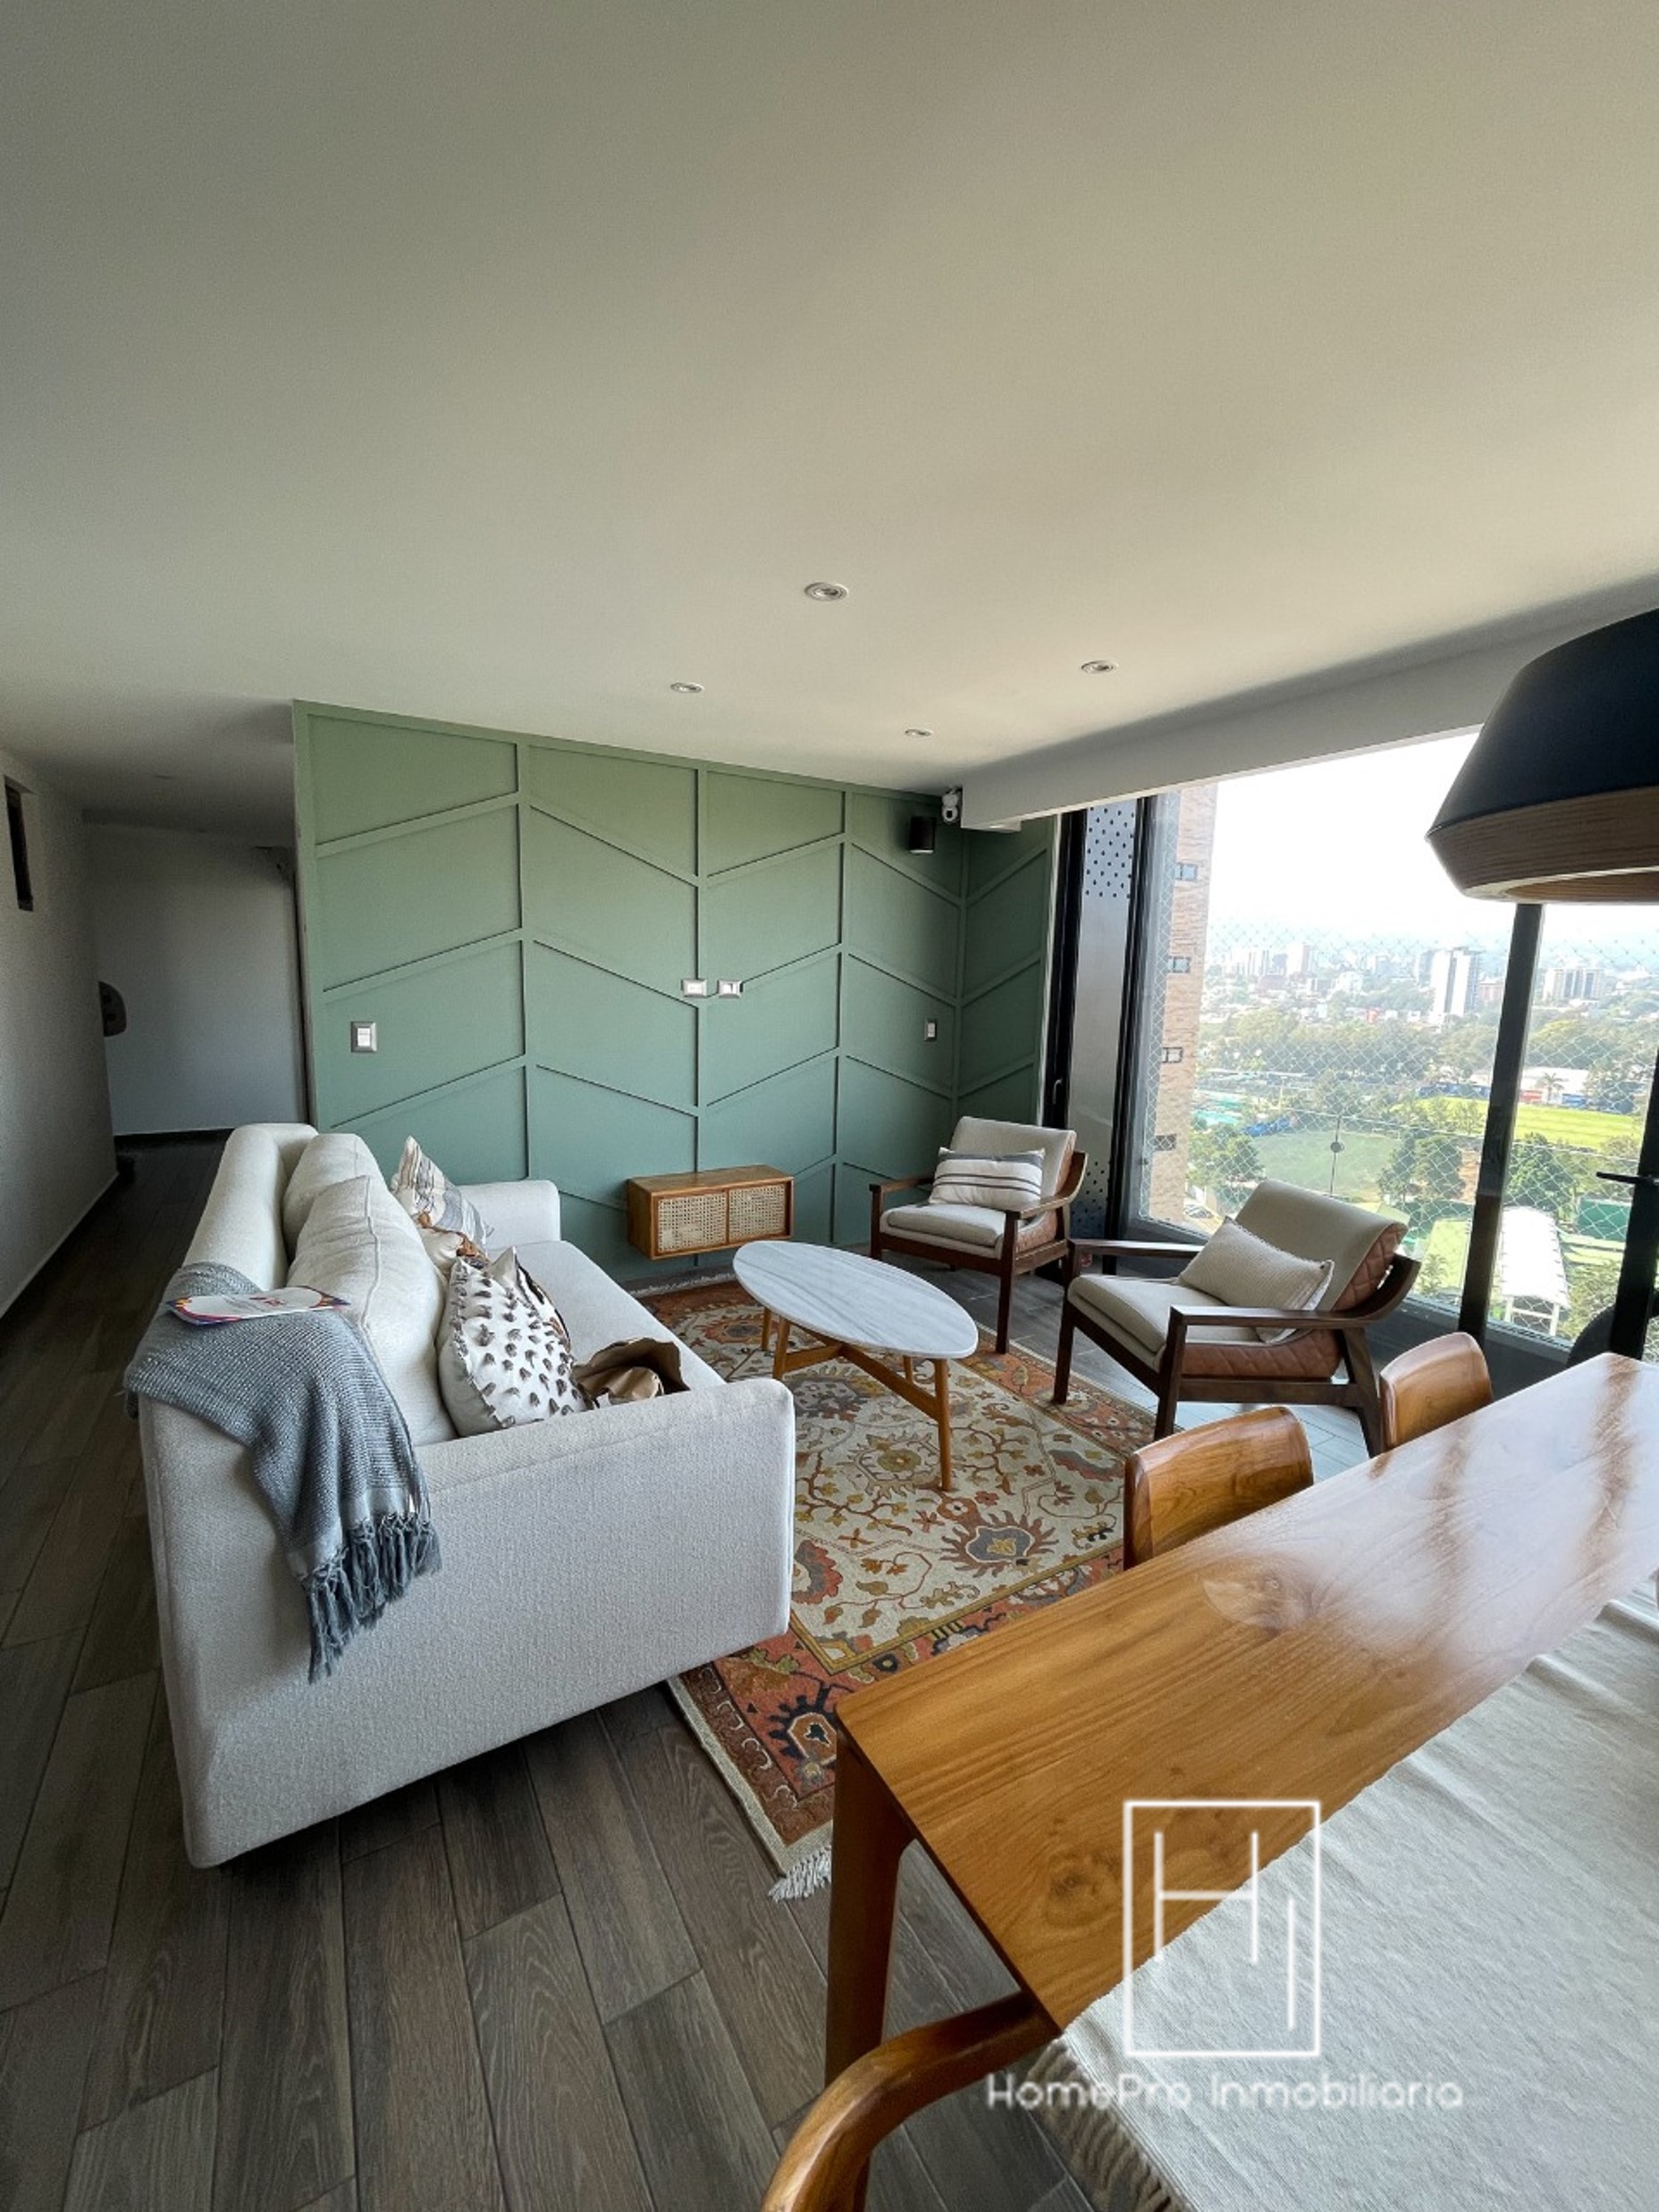 HomePro Inmobiliaria vende hermoso apartamento en zona 15.